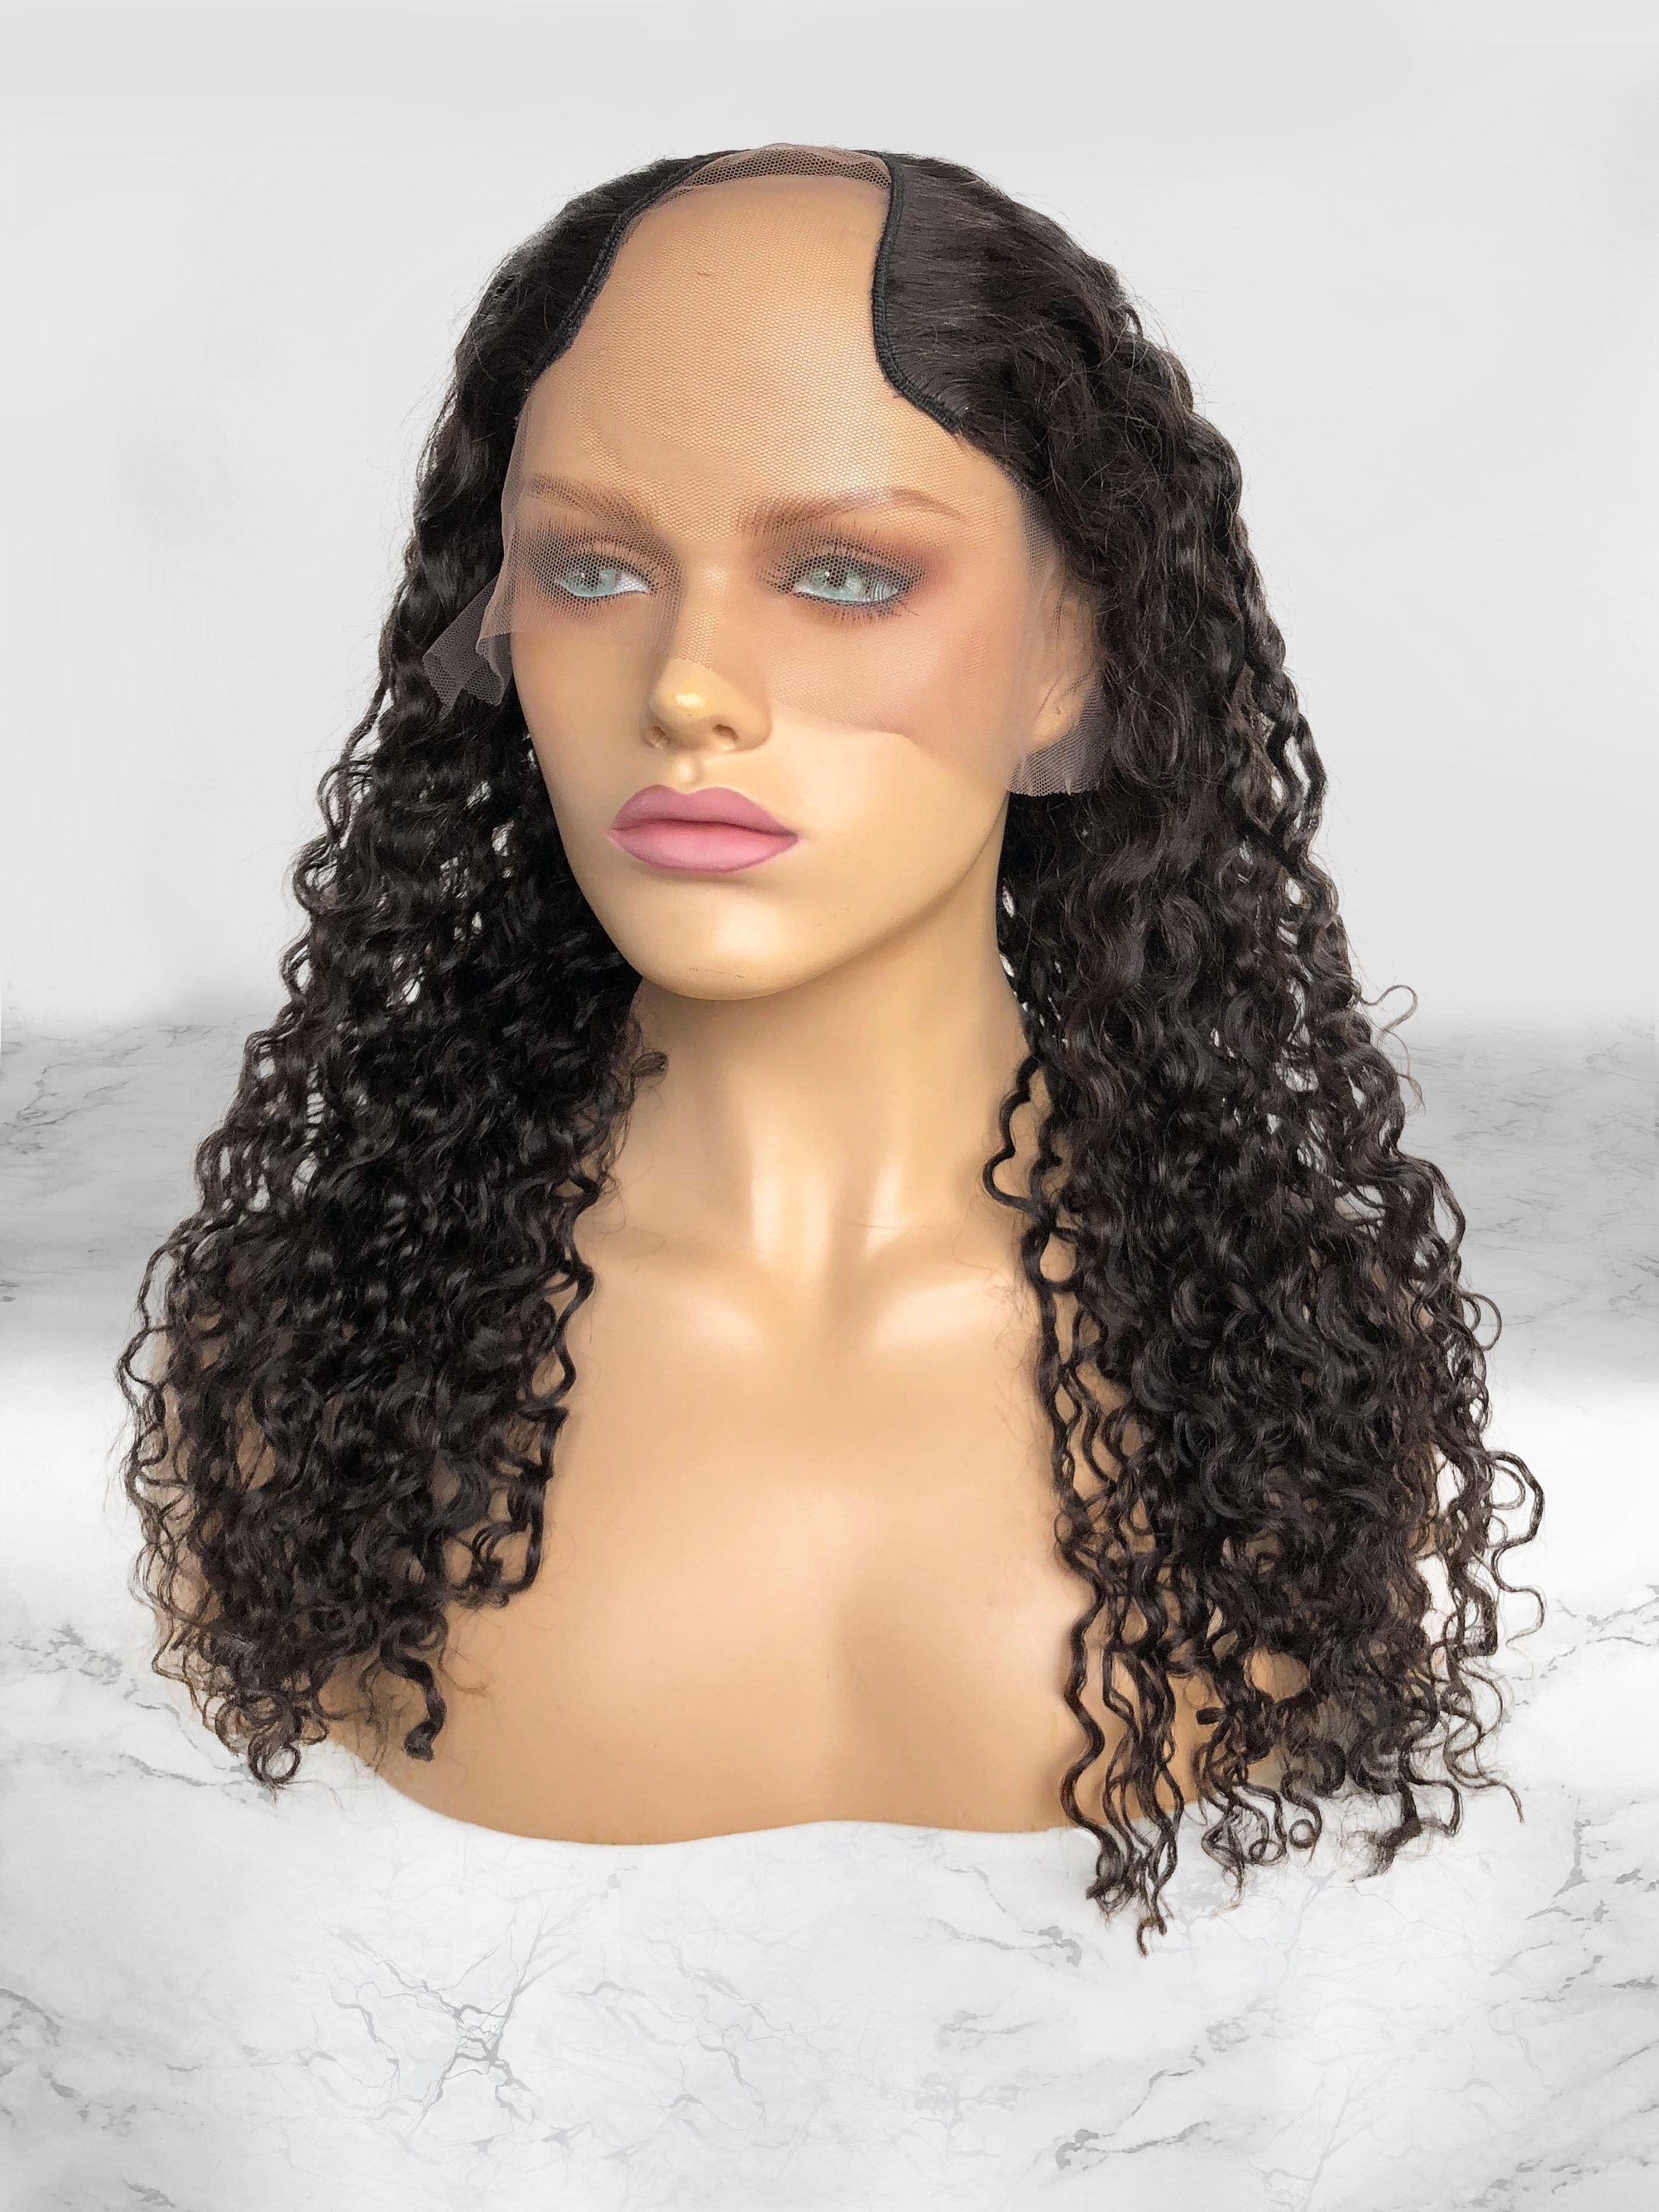 Mannequin Head With Human Hair  Buy Online - Best Price in Kenya